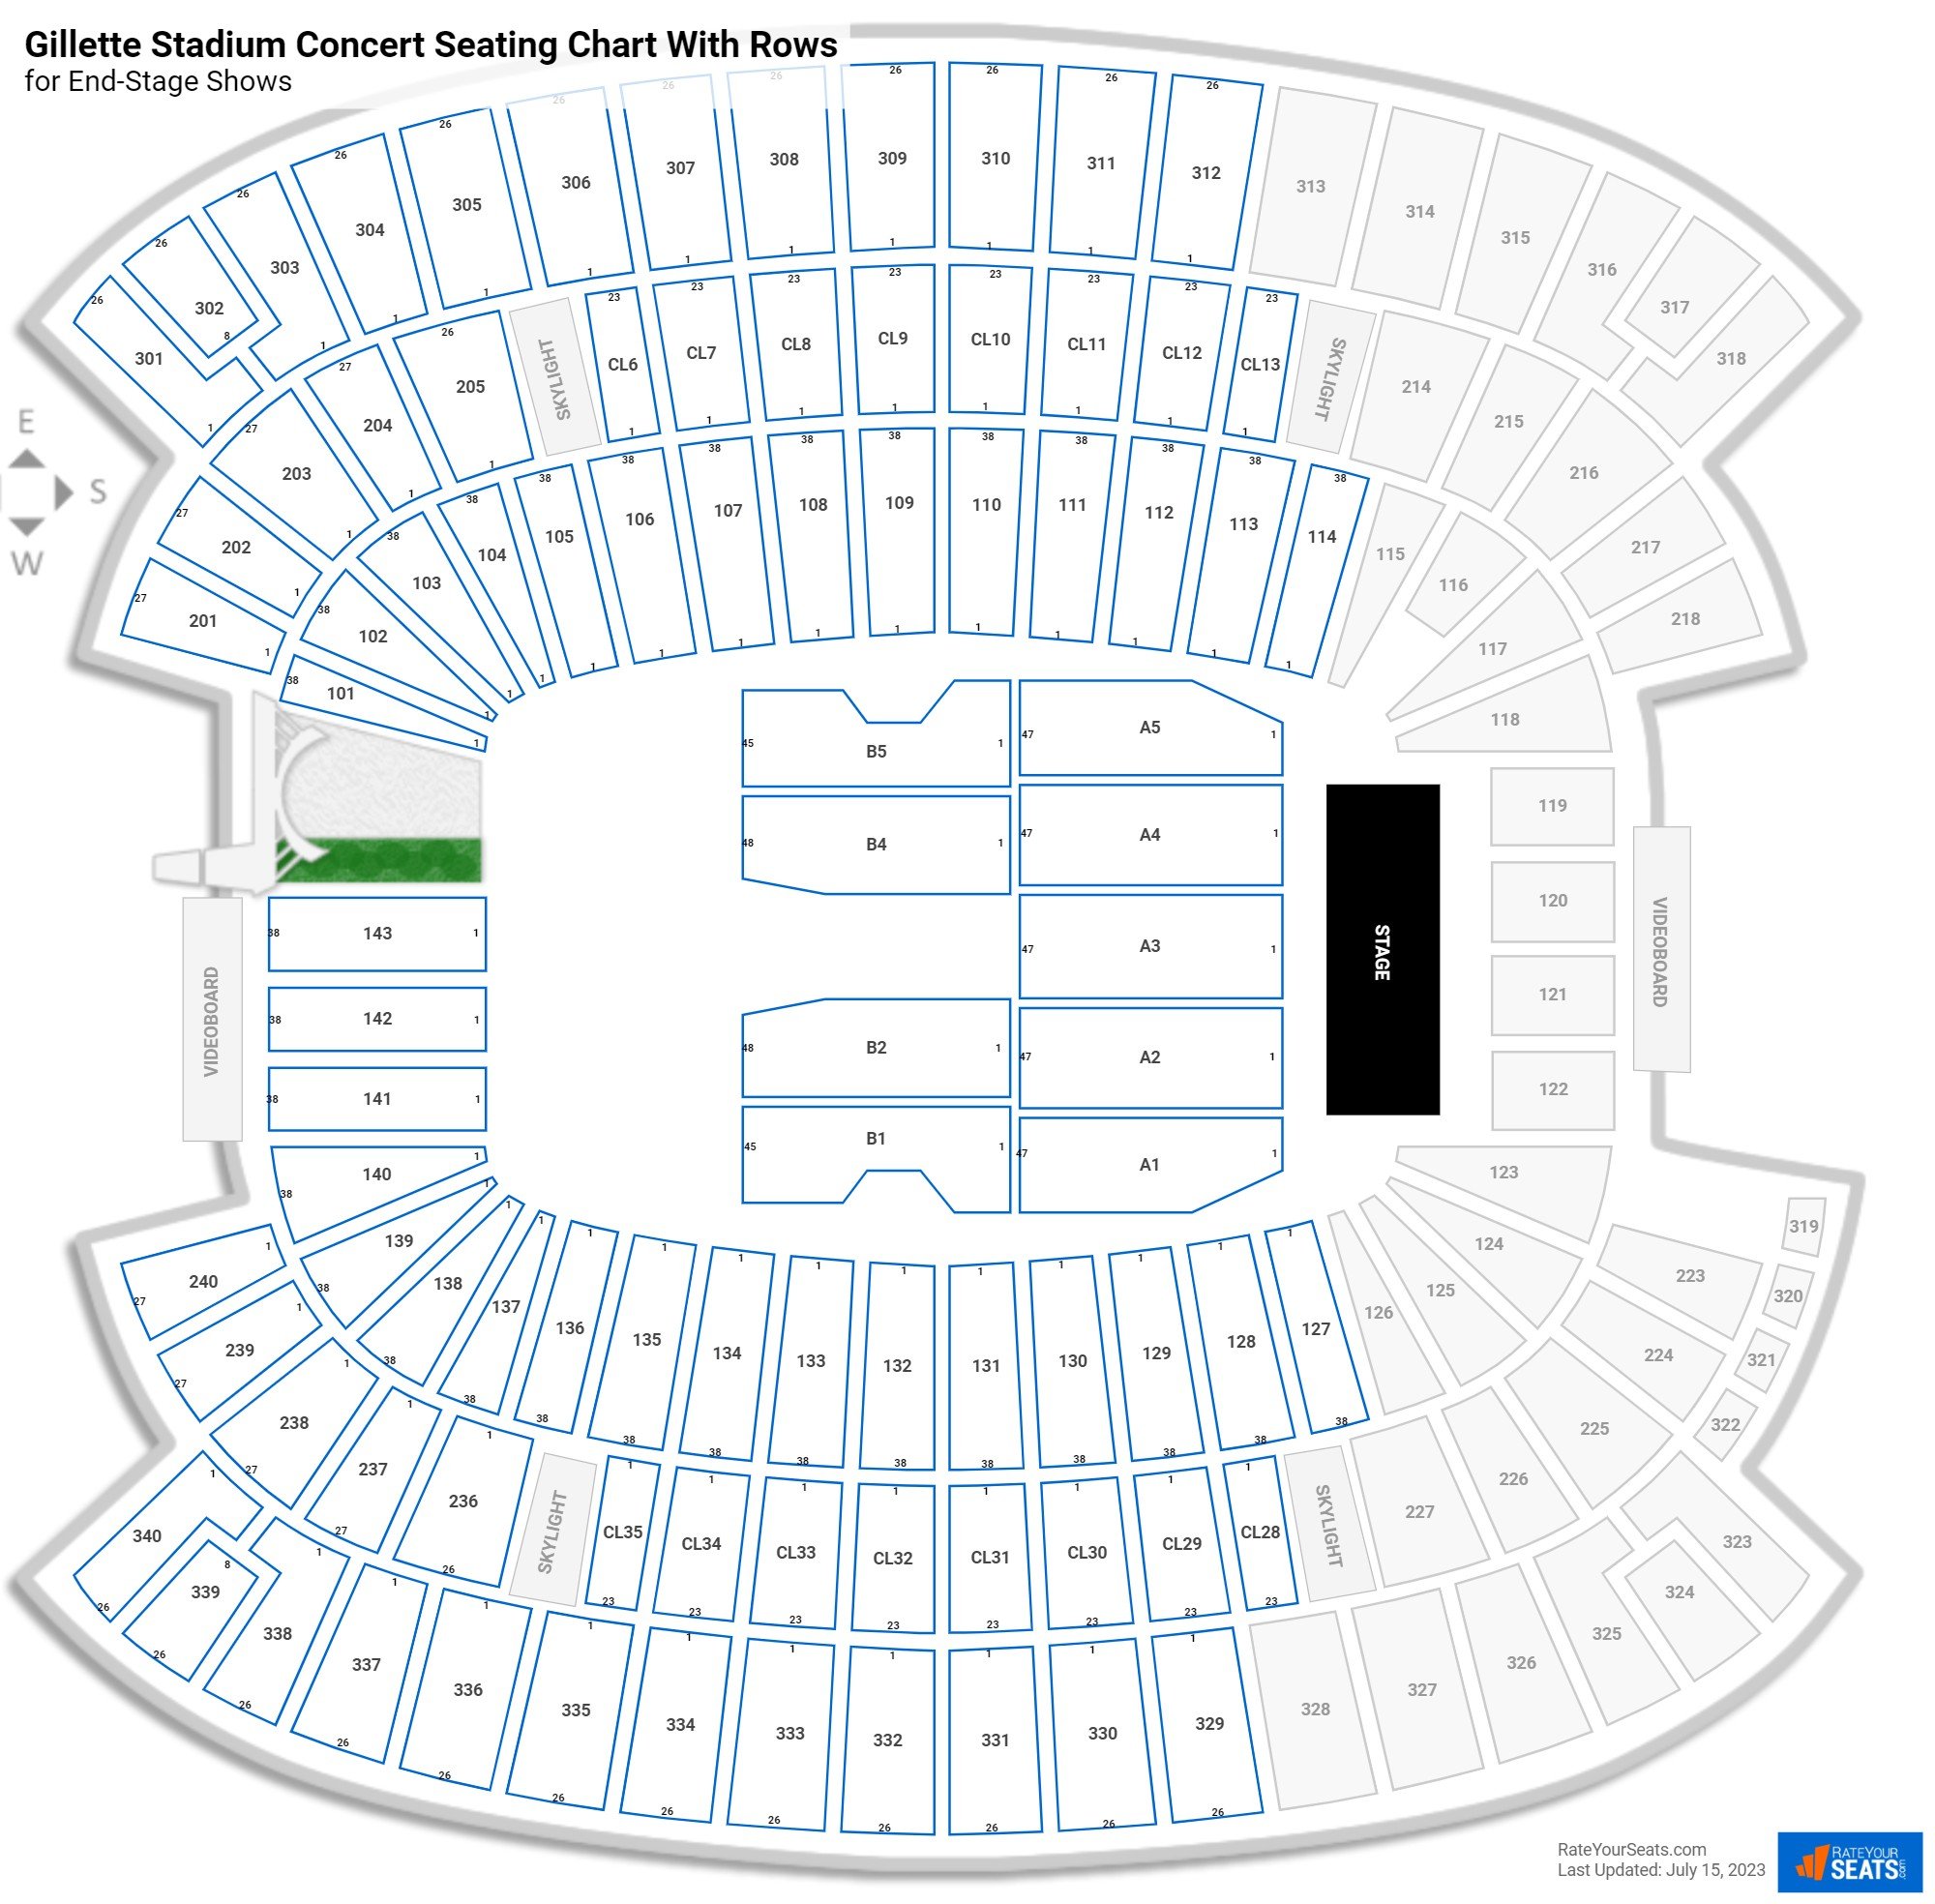 Gillette Concert Seating Chart